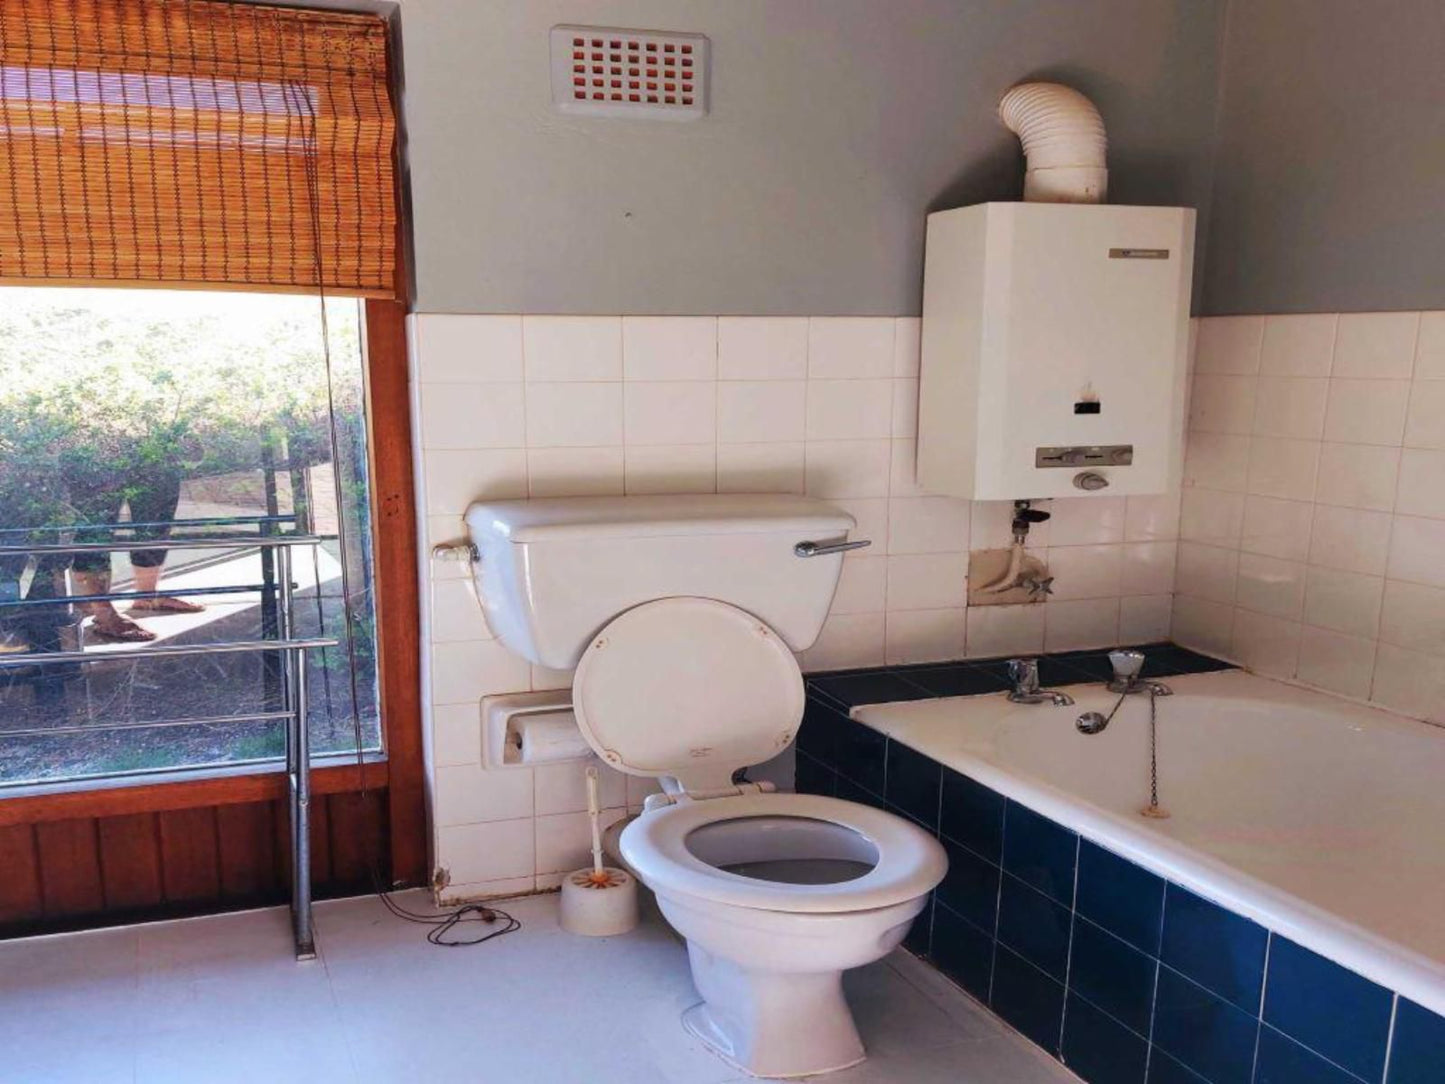 Edible Shores Pringle Bay Western Cape South Africa Bathroom